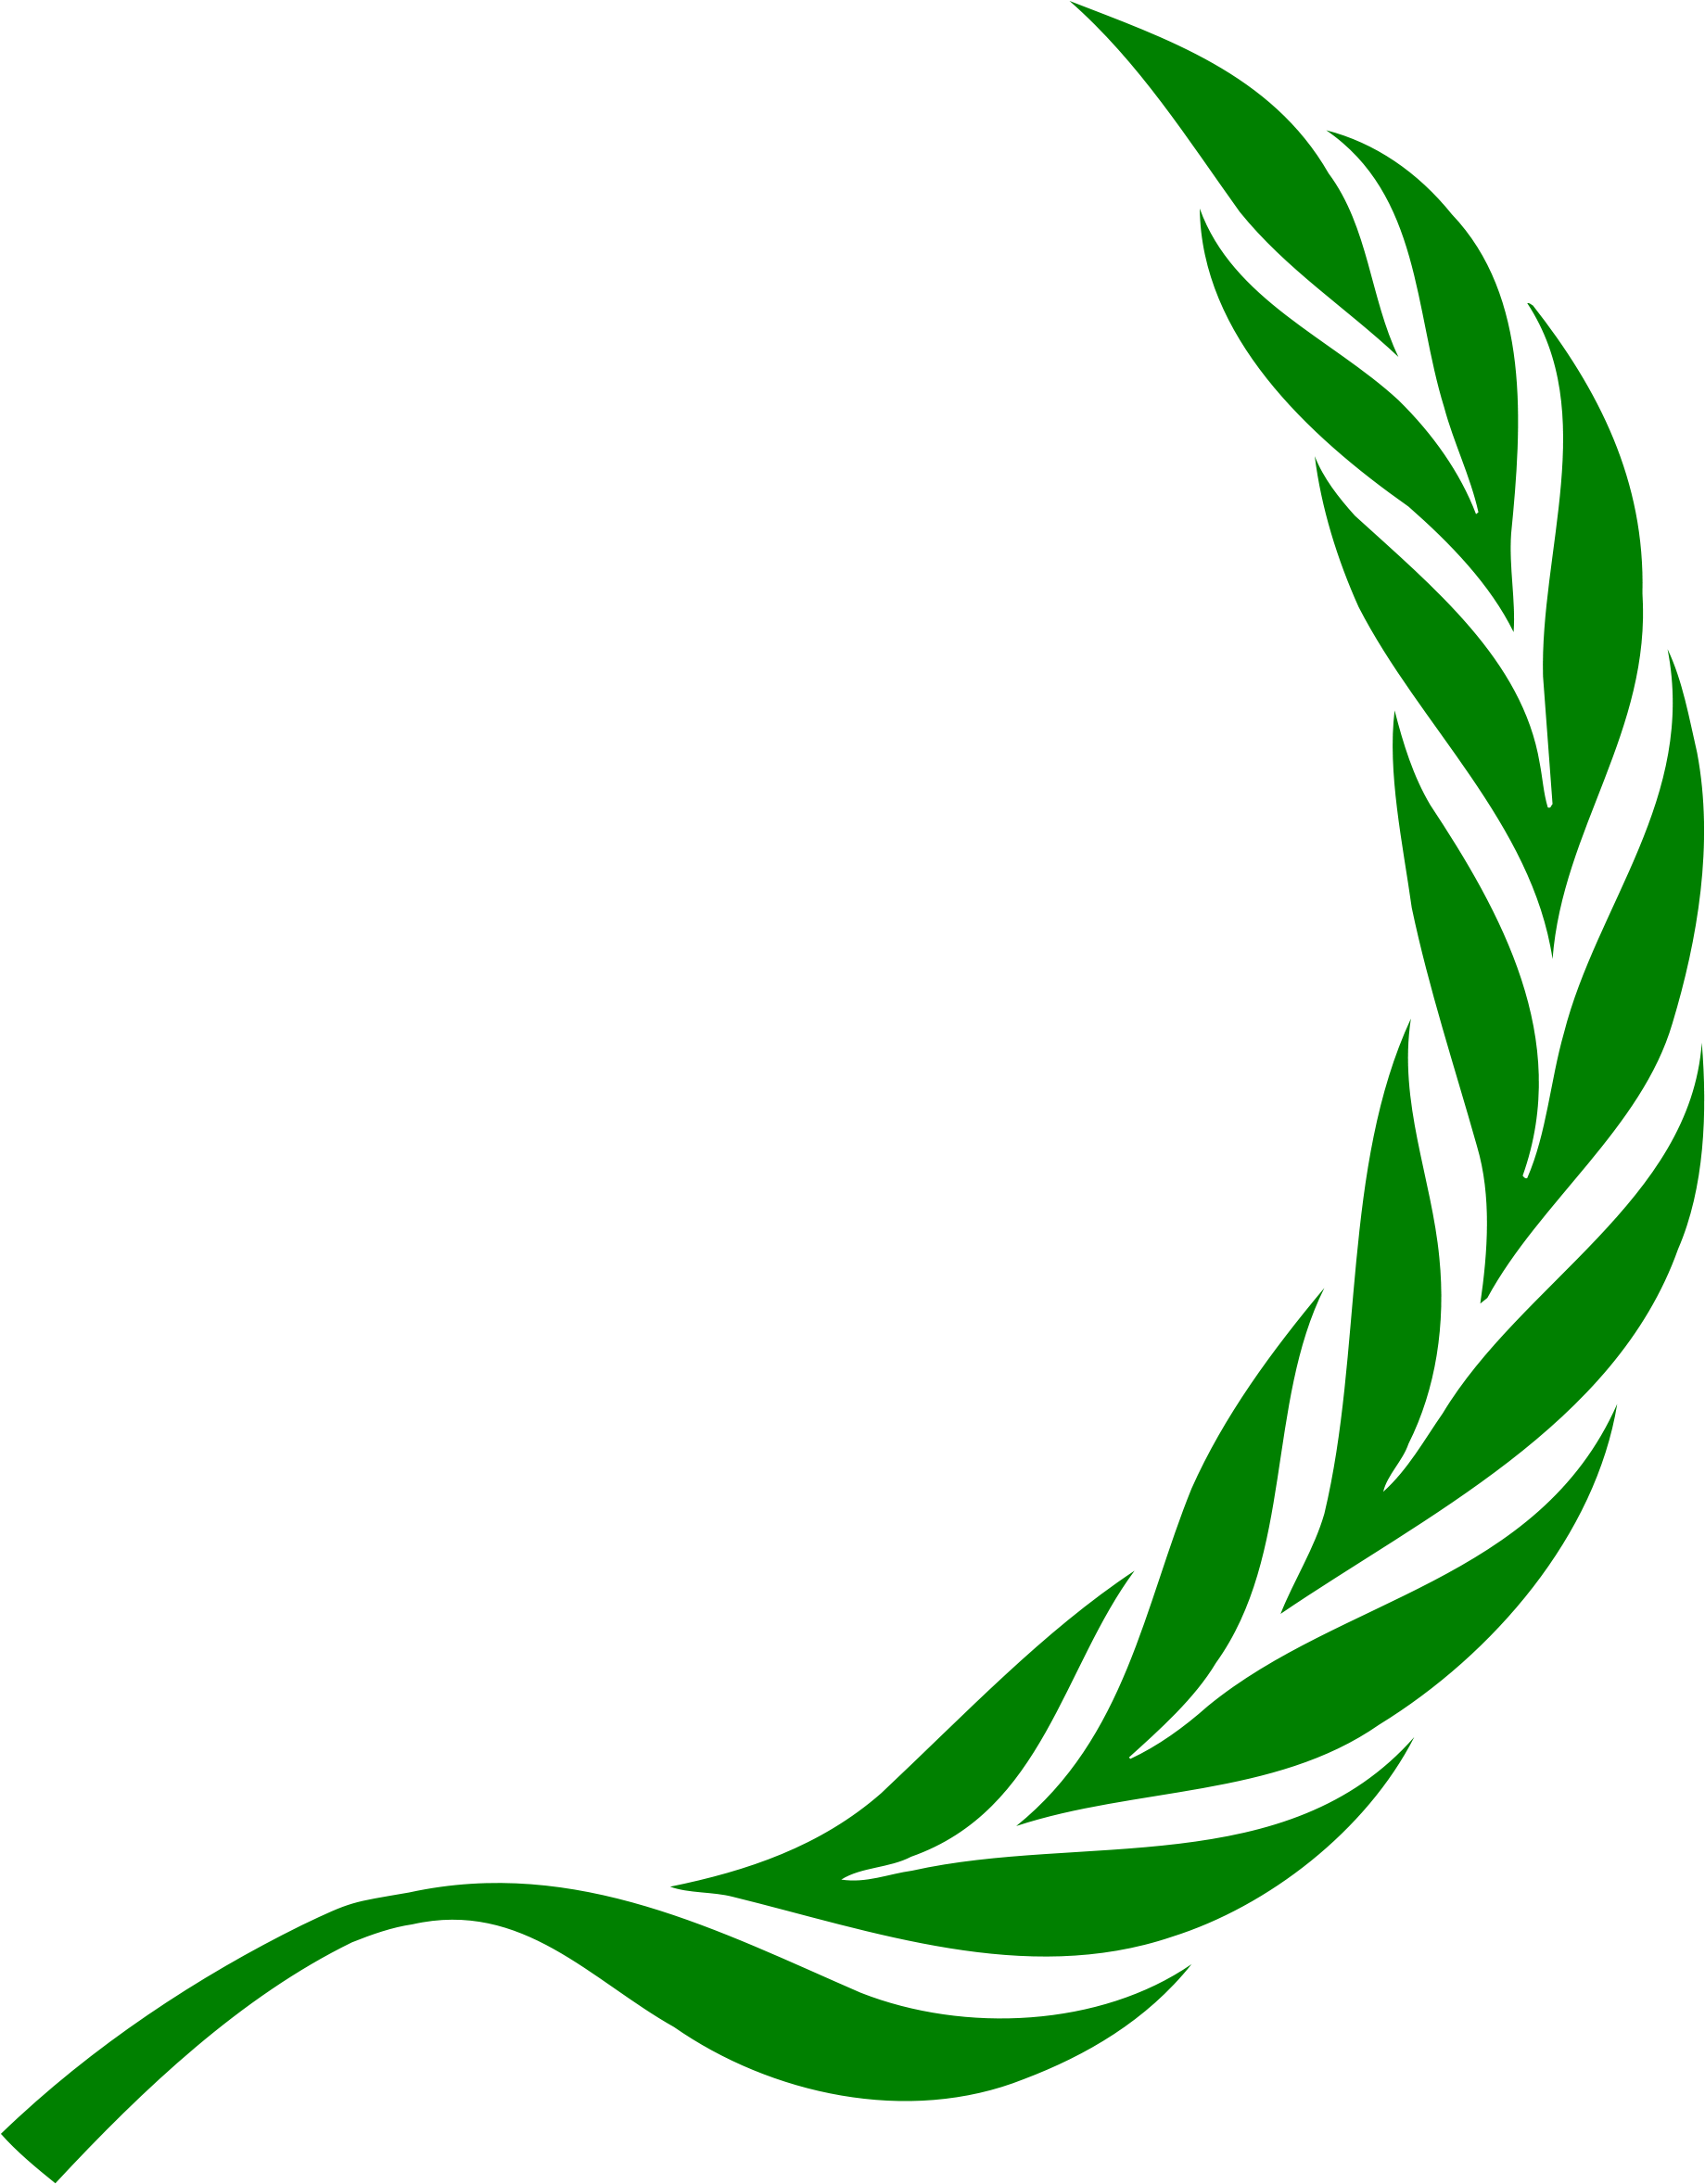 Laurel Wreath Images 14, - Human Rights Council Logo (2000x2516)